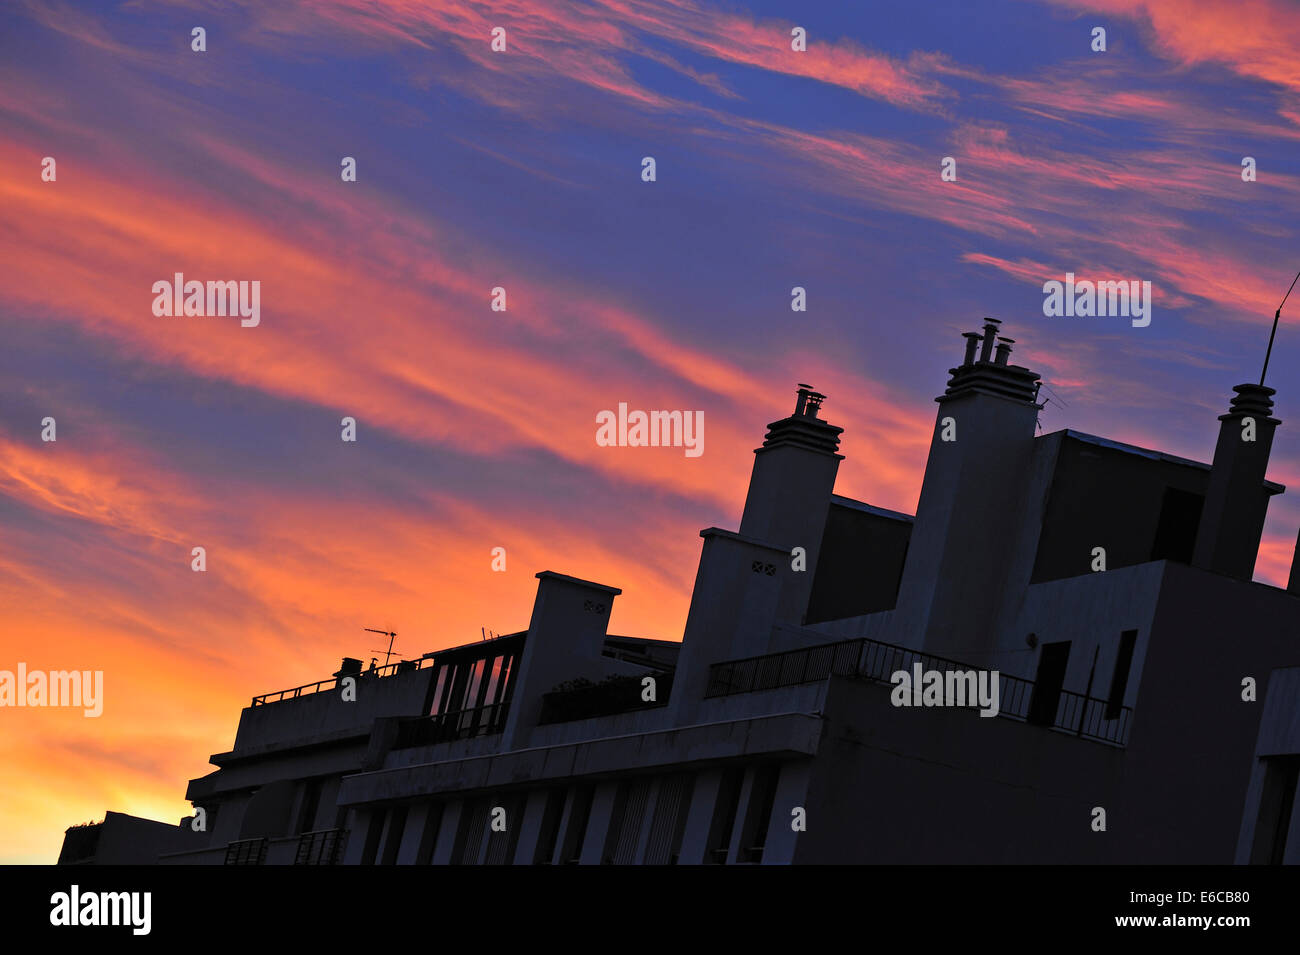 Gebäude Silhouette bei Sonnenaufgang/Sonnenuntergang mit roten Himmel Stockfoto